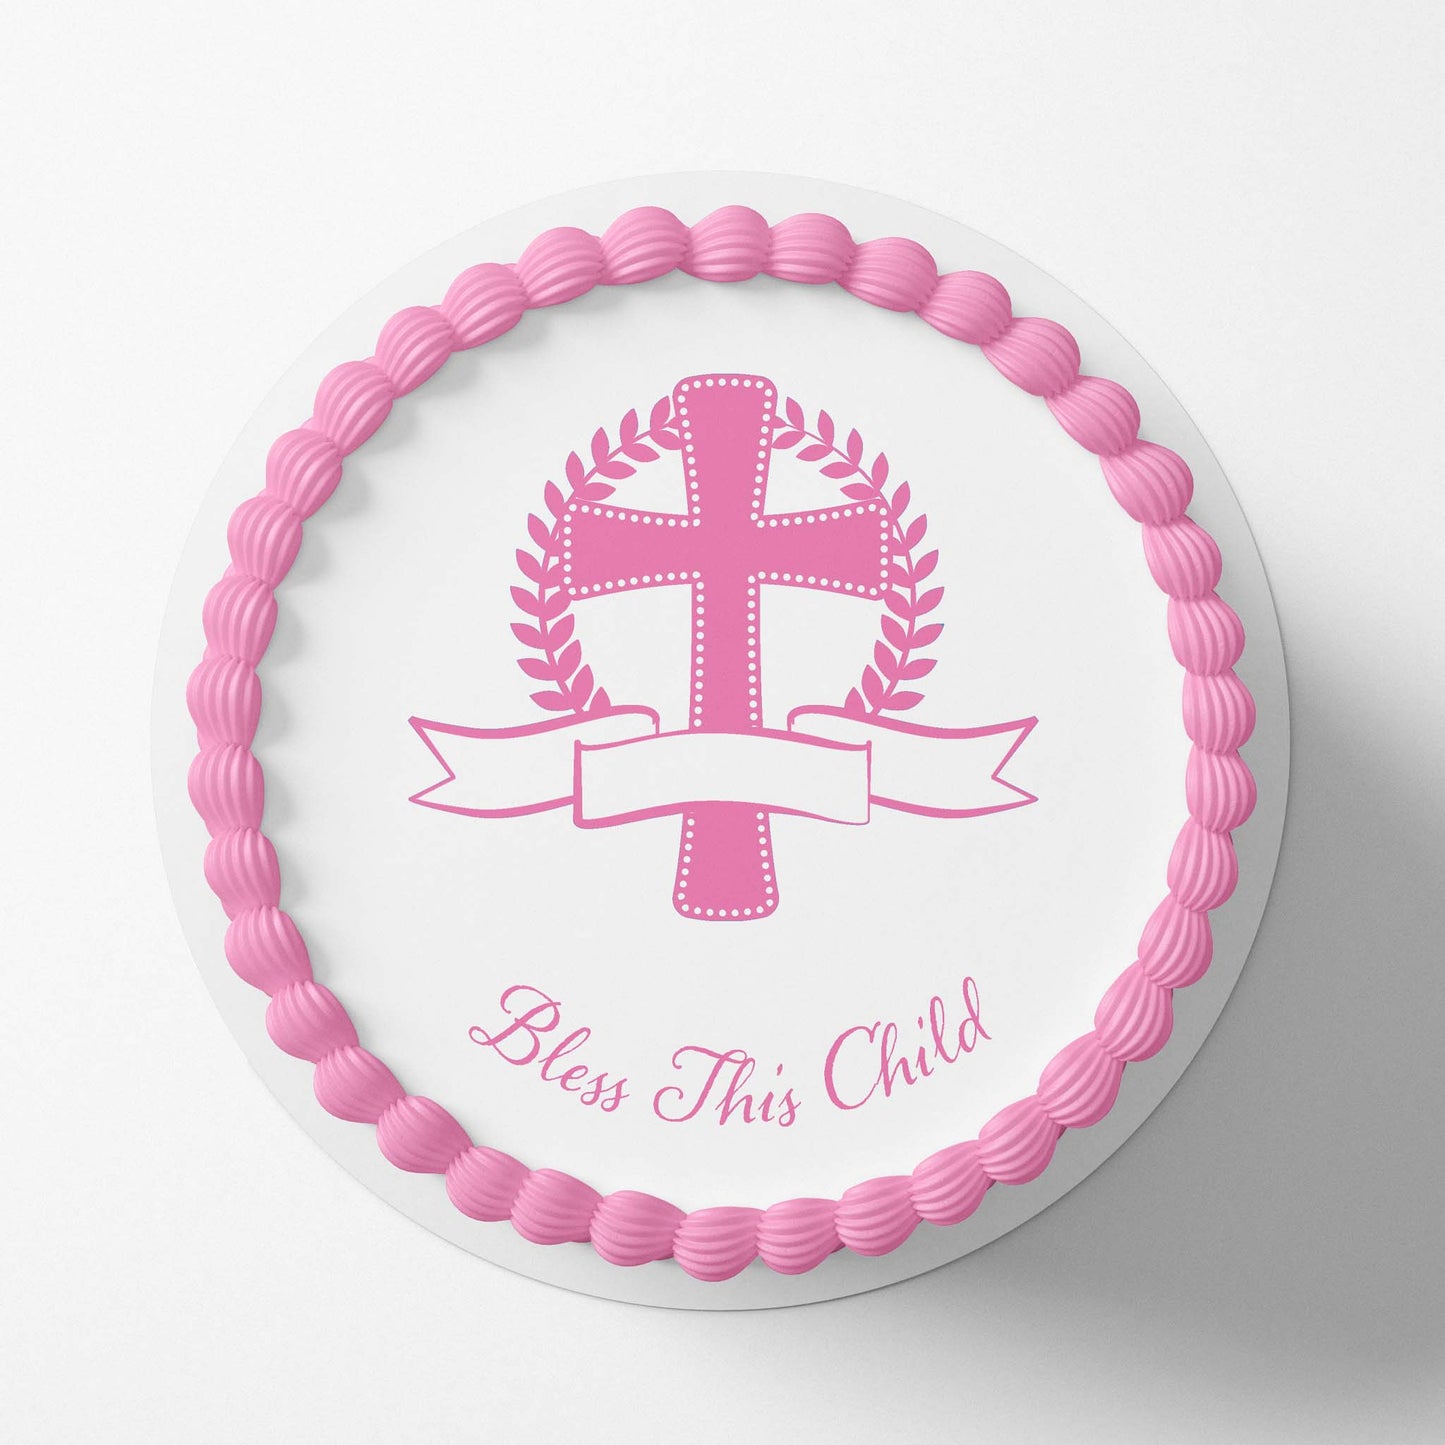 Bless This Child Pink - Edible Icing Image Edible Cake Topper, Edible Cake Image, ,printsoncakes